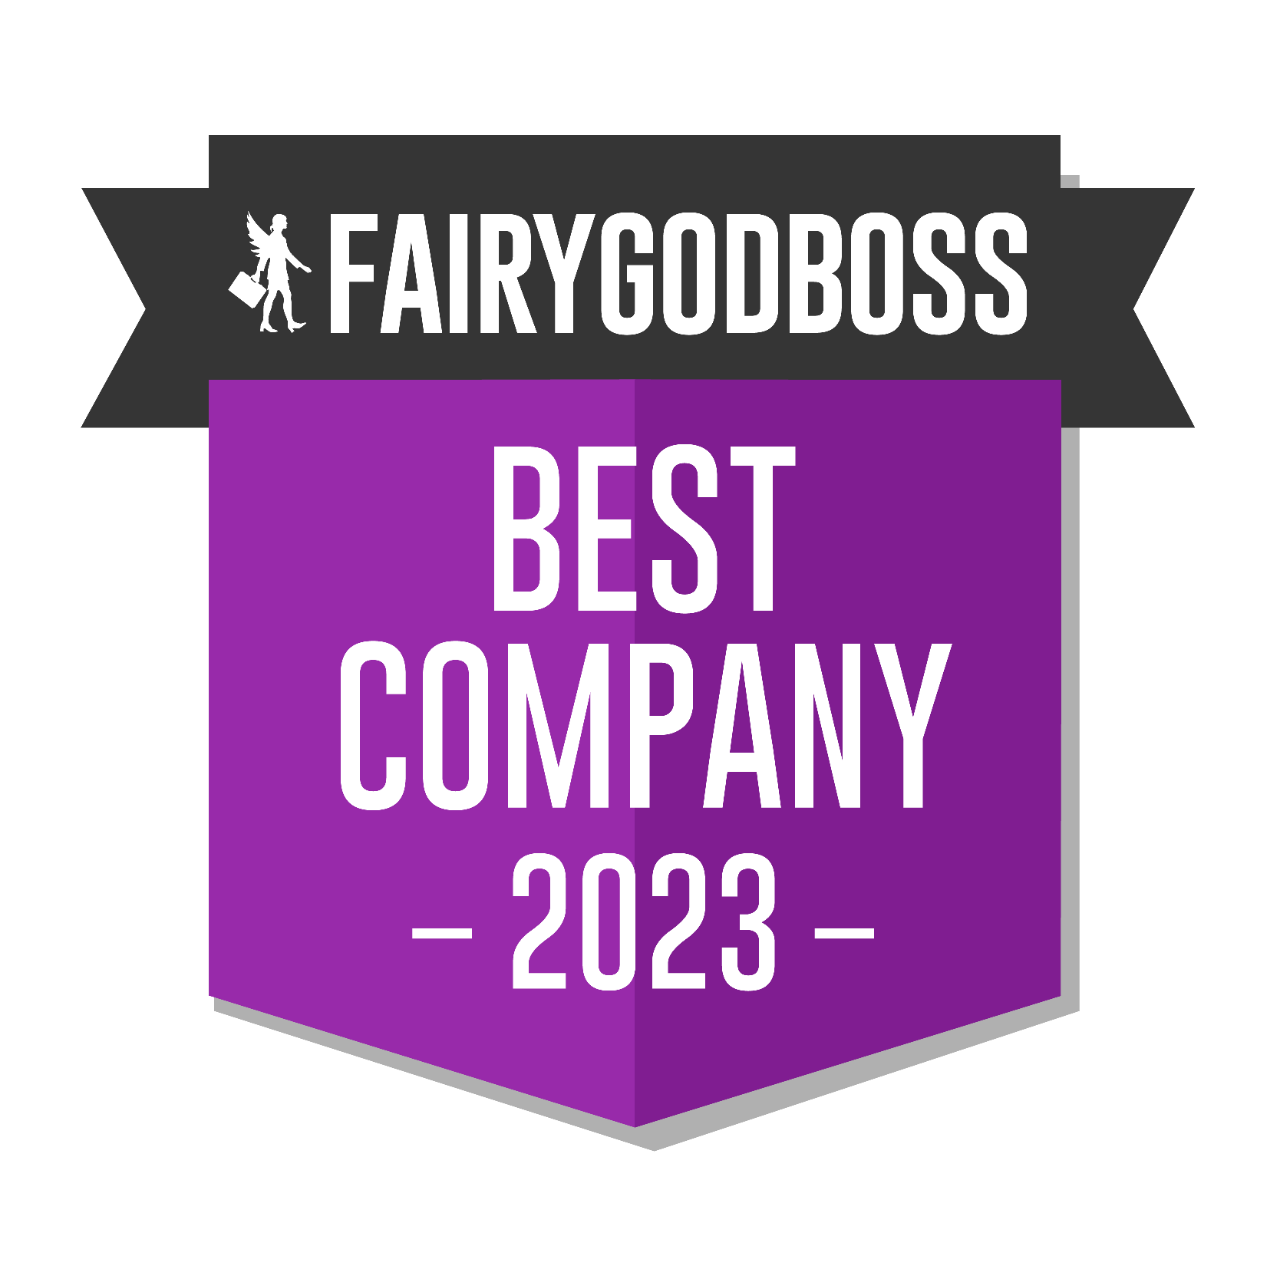 Fairygodboss best company 2023